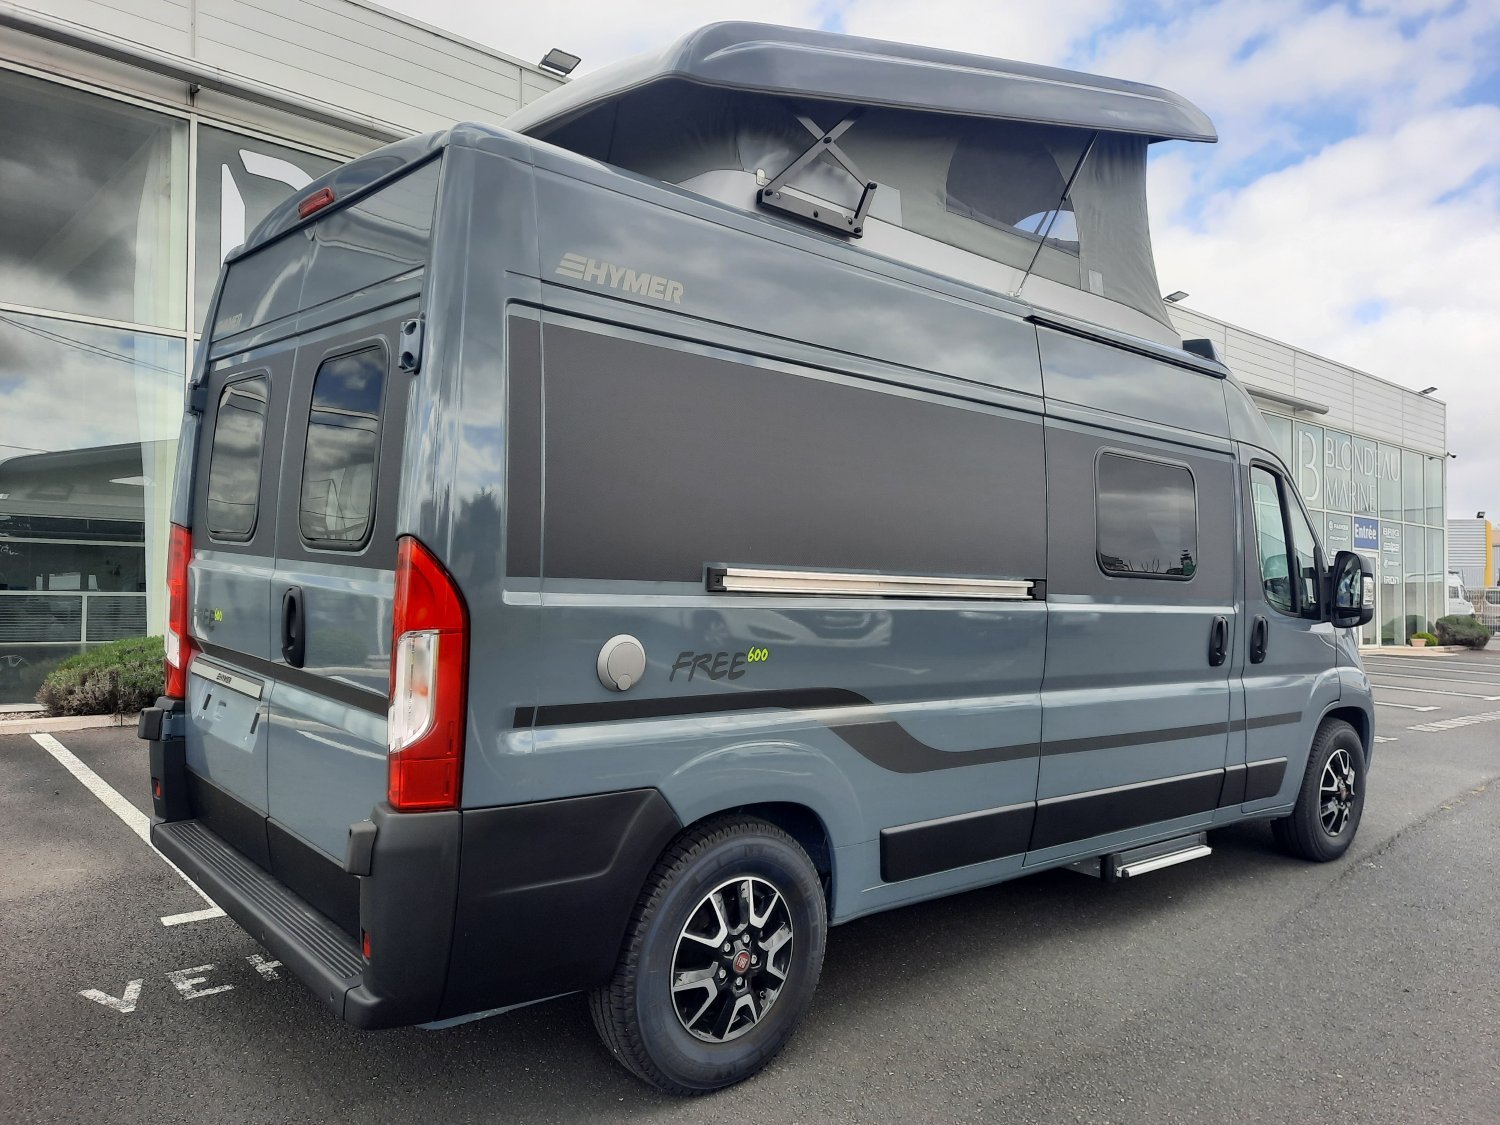 Hymer Camper Vans / Hymercar Free 600 